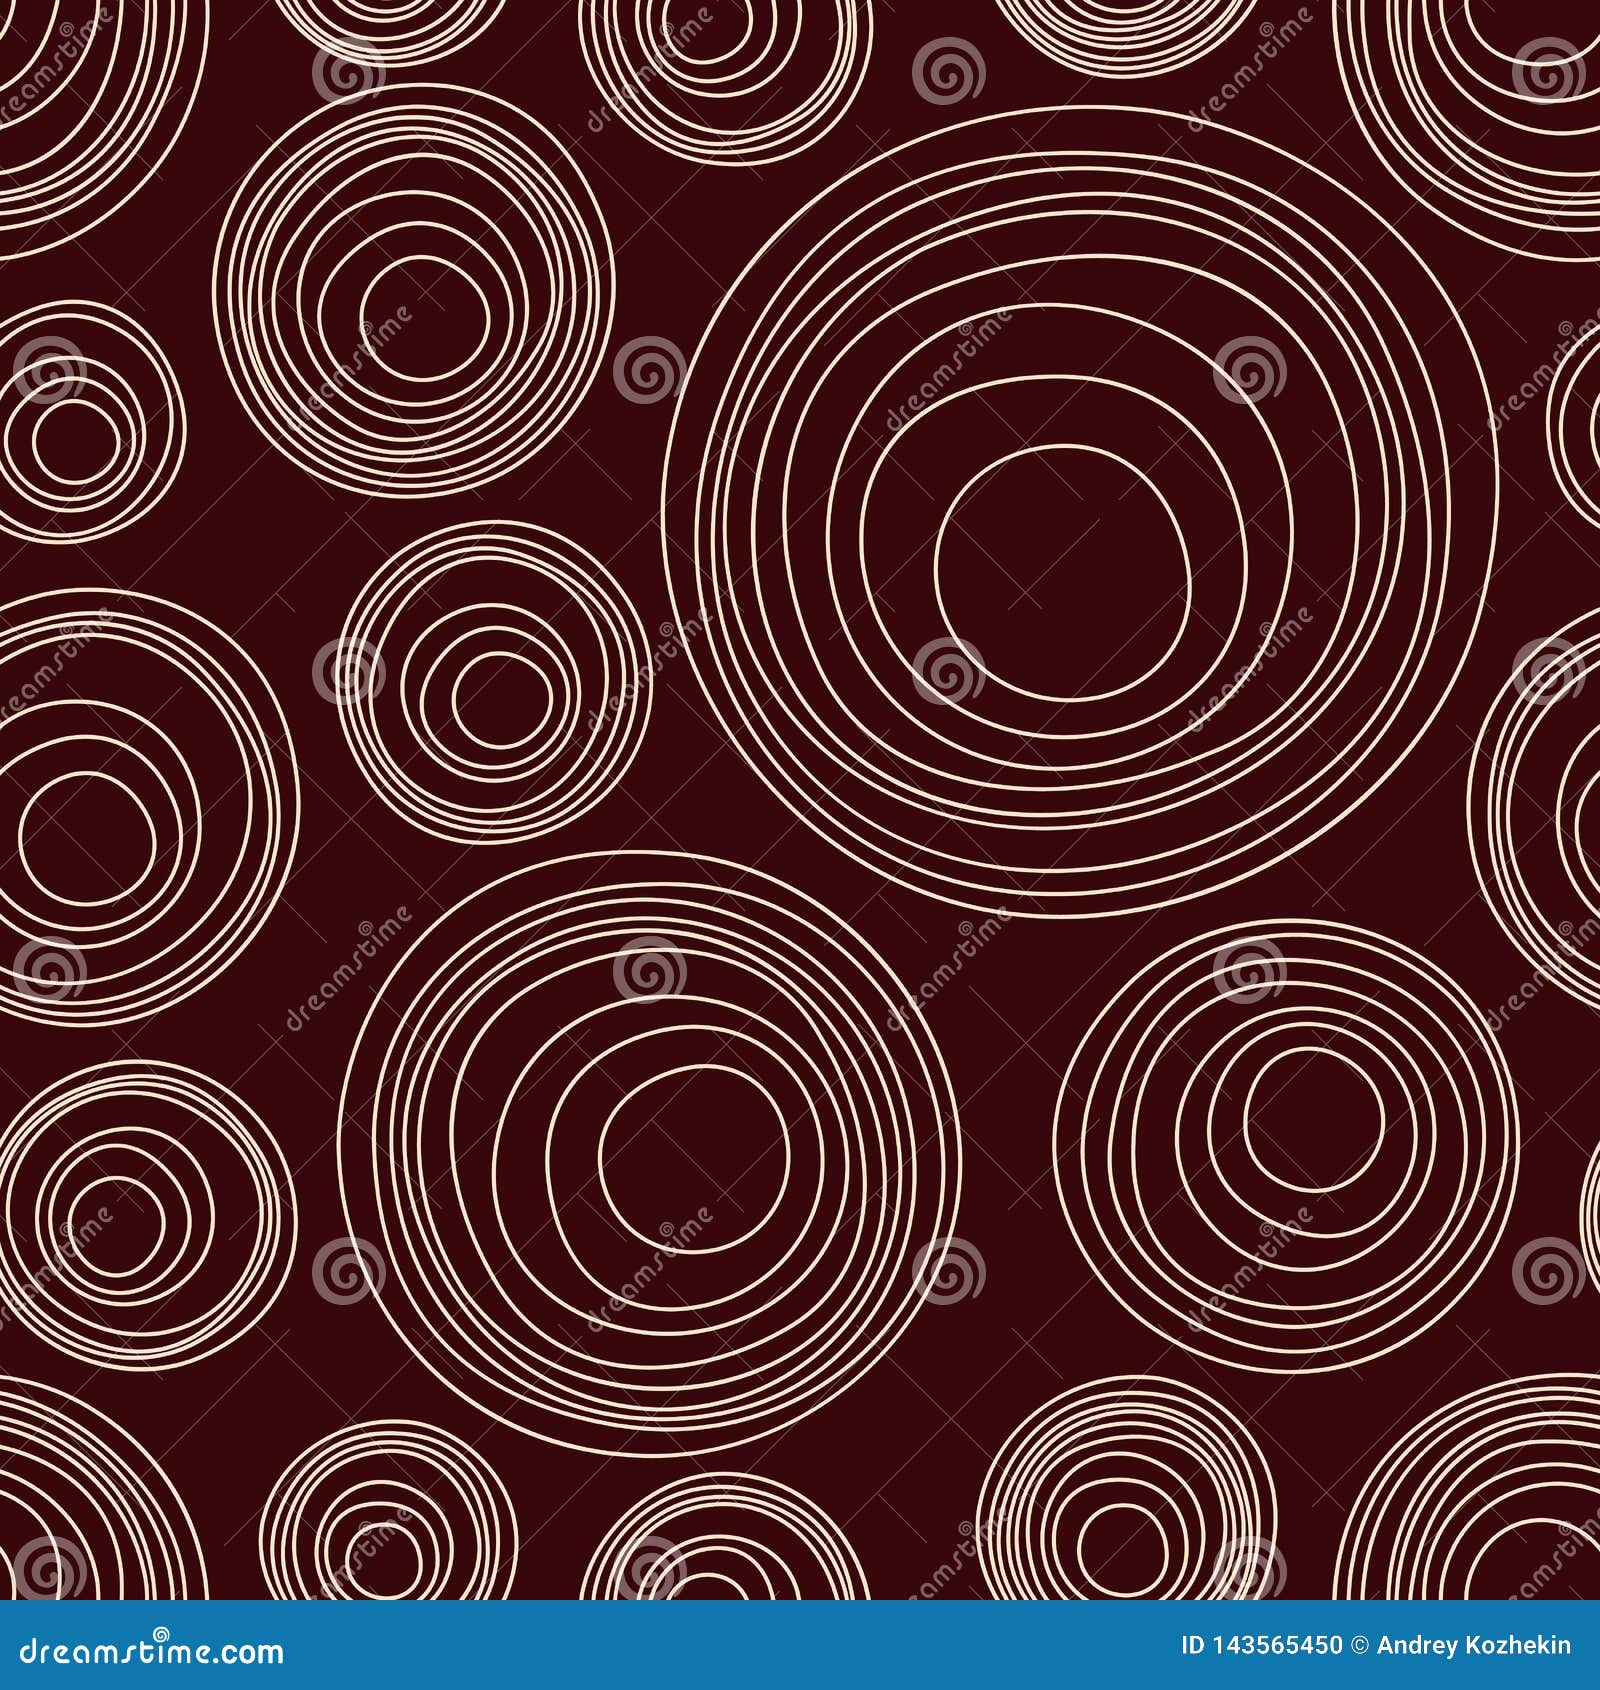 abstract asymmetrical circles seamless pattern. australian aboriginal ornament.